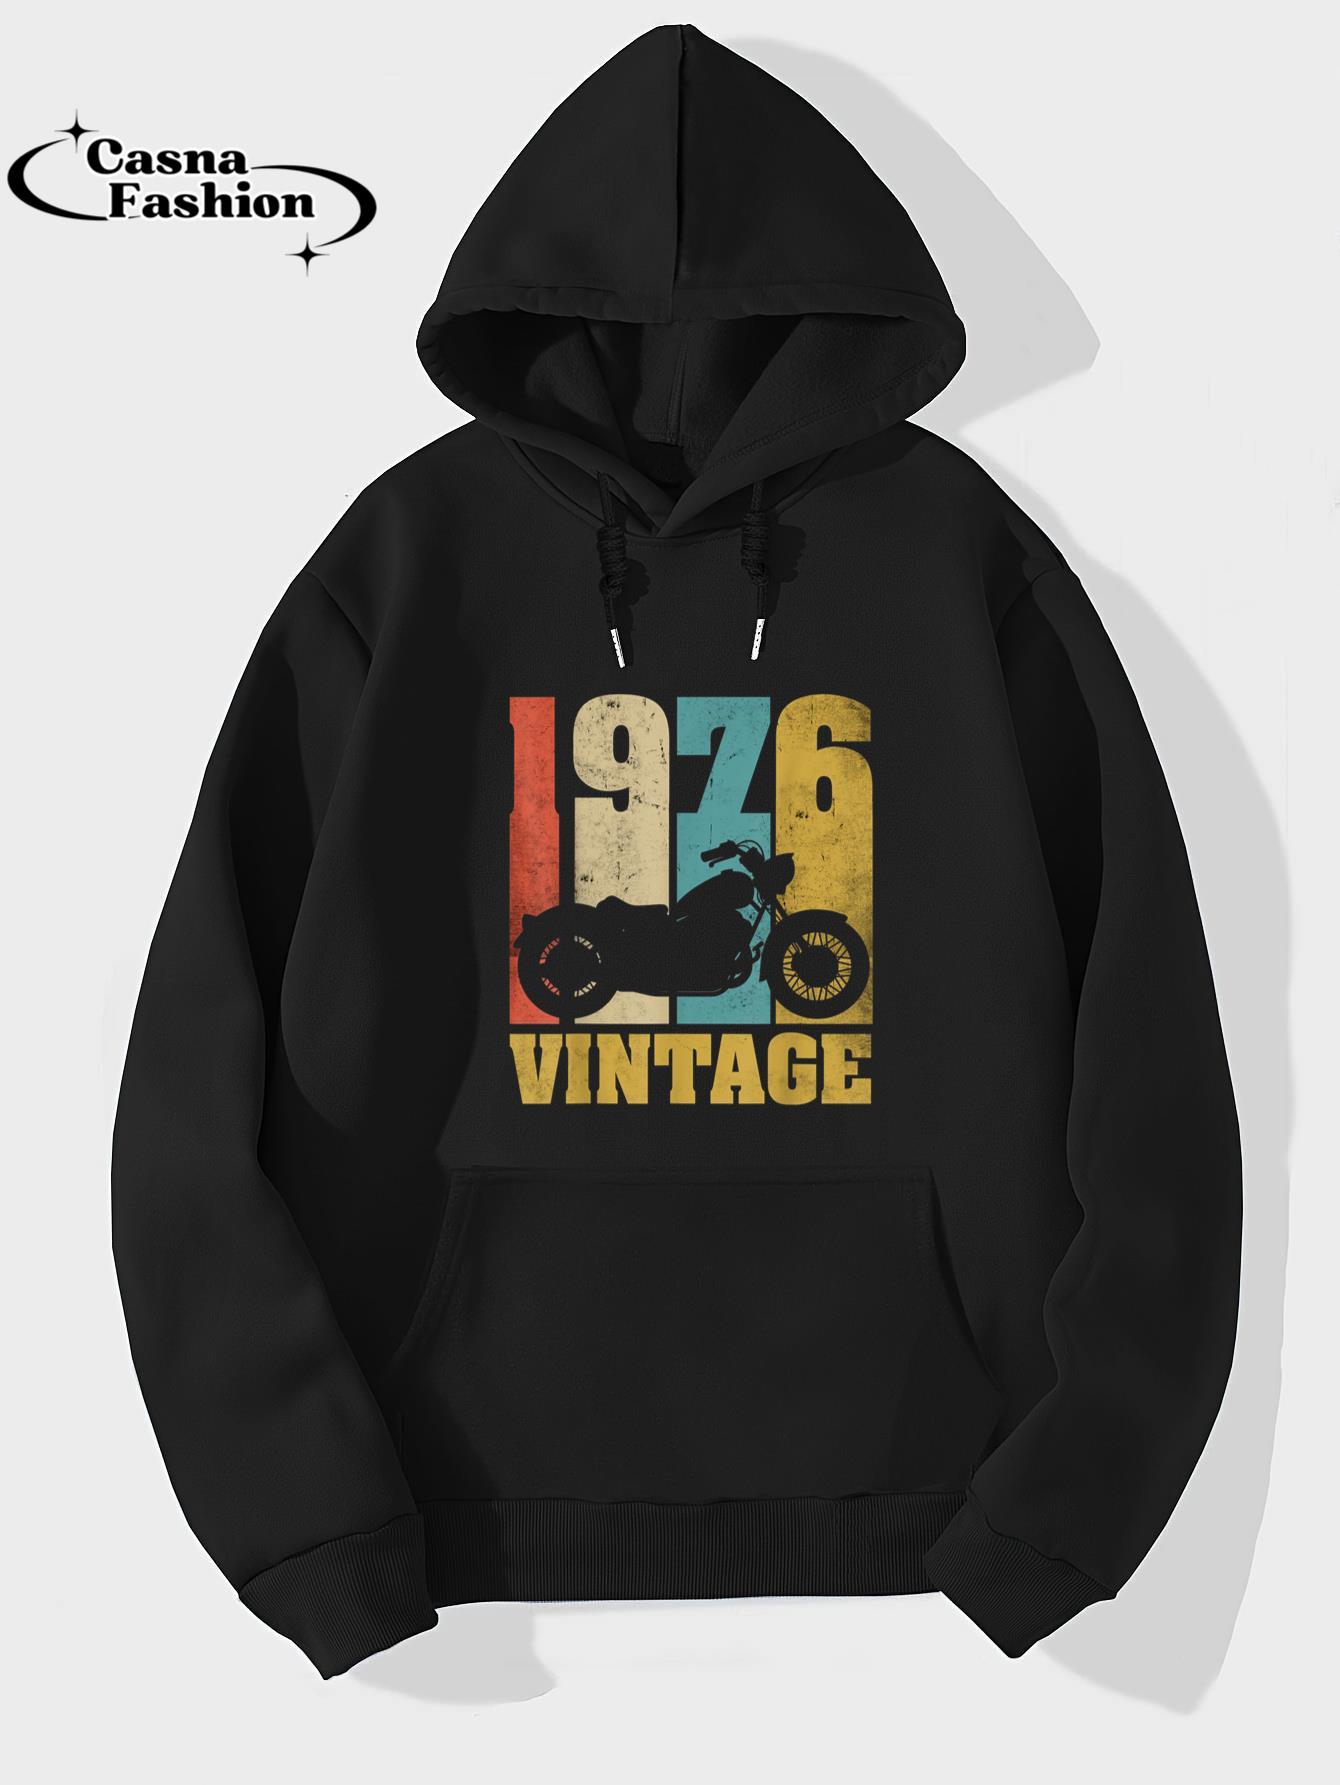 casnafashion_Hoodie_44th Birthday Biker Gift T-Shirt - Vintage 1976 Motocycle T-Shirt_hoodie_black hoodie